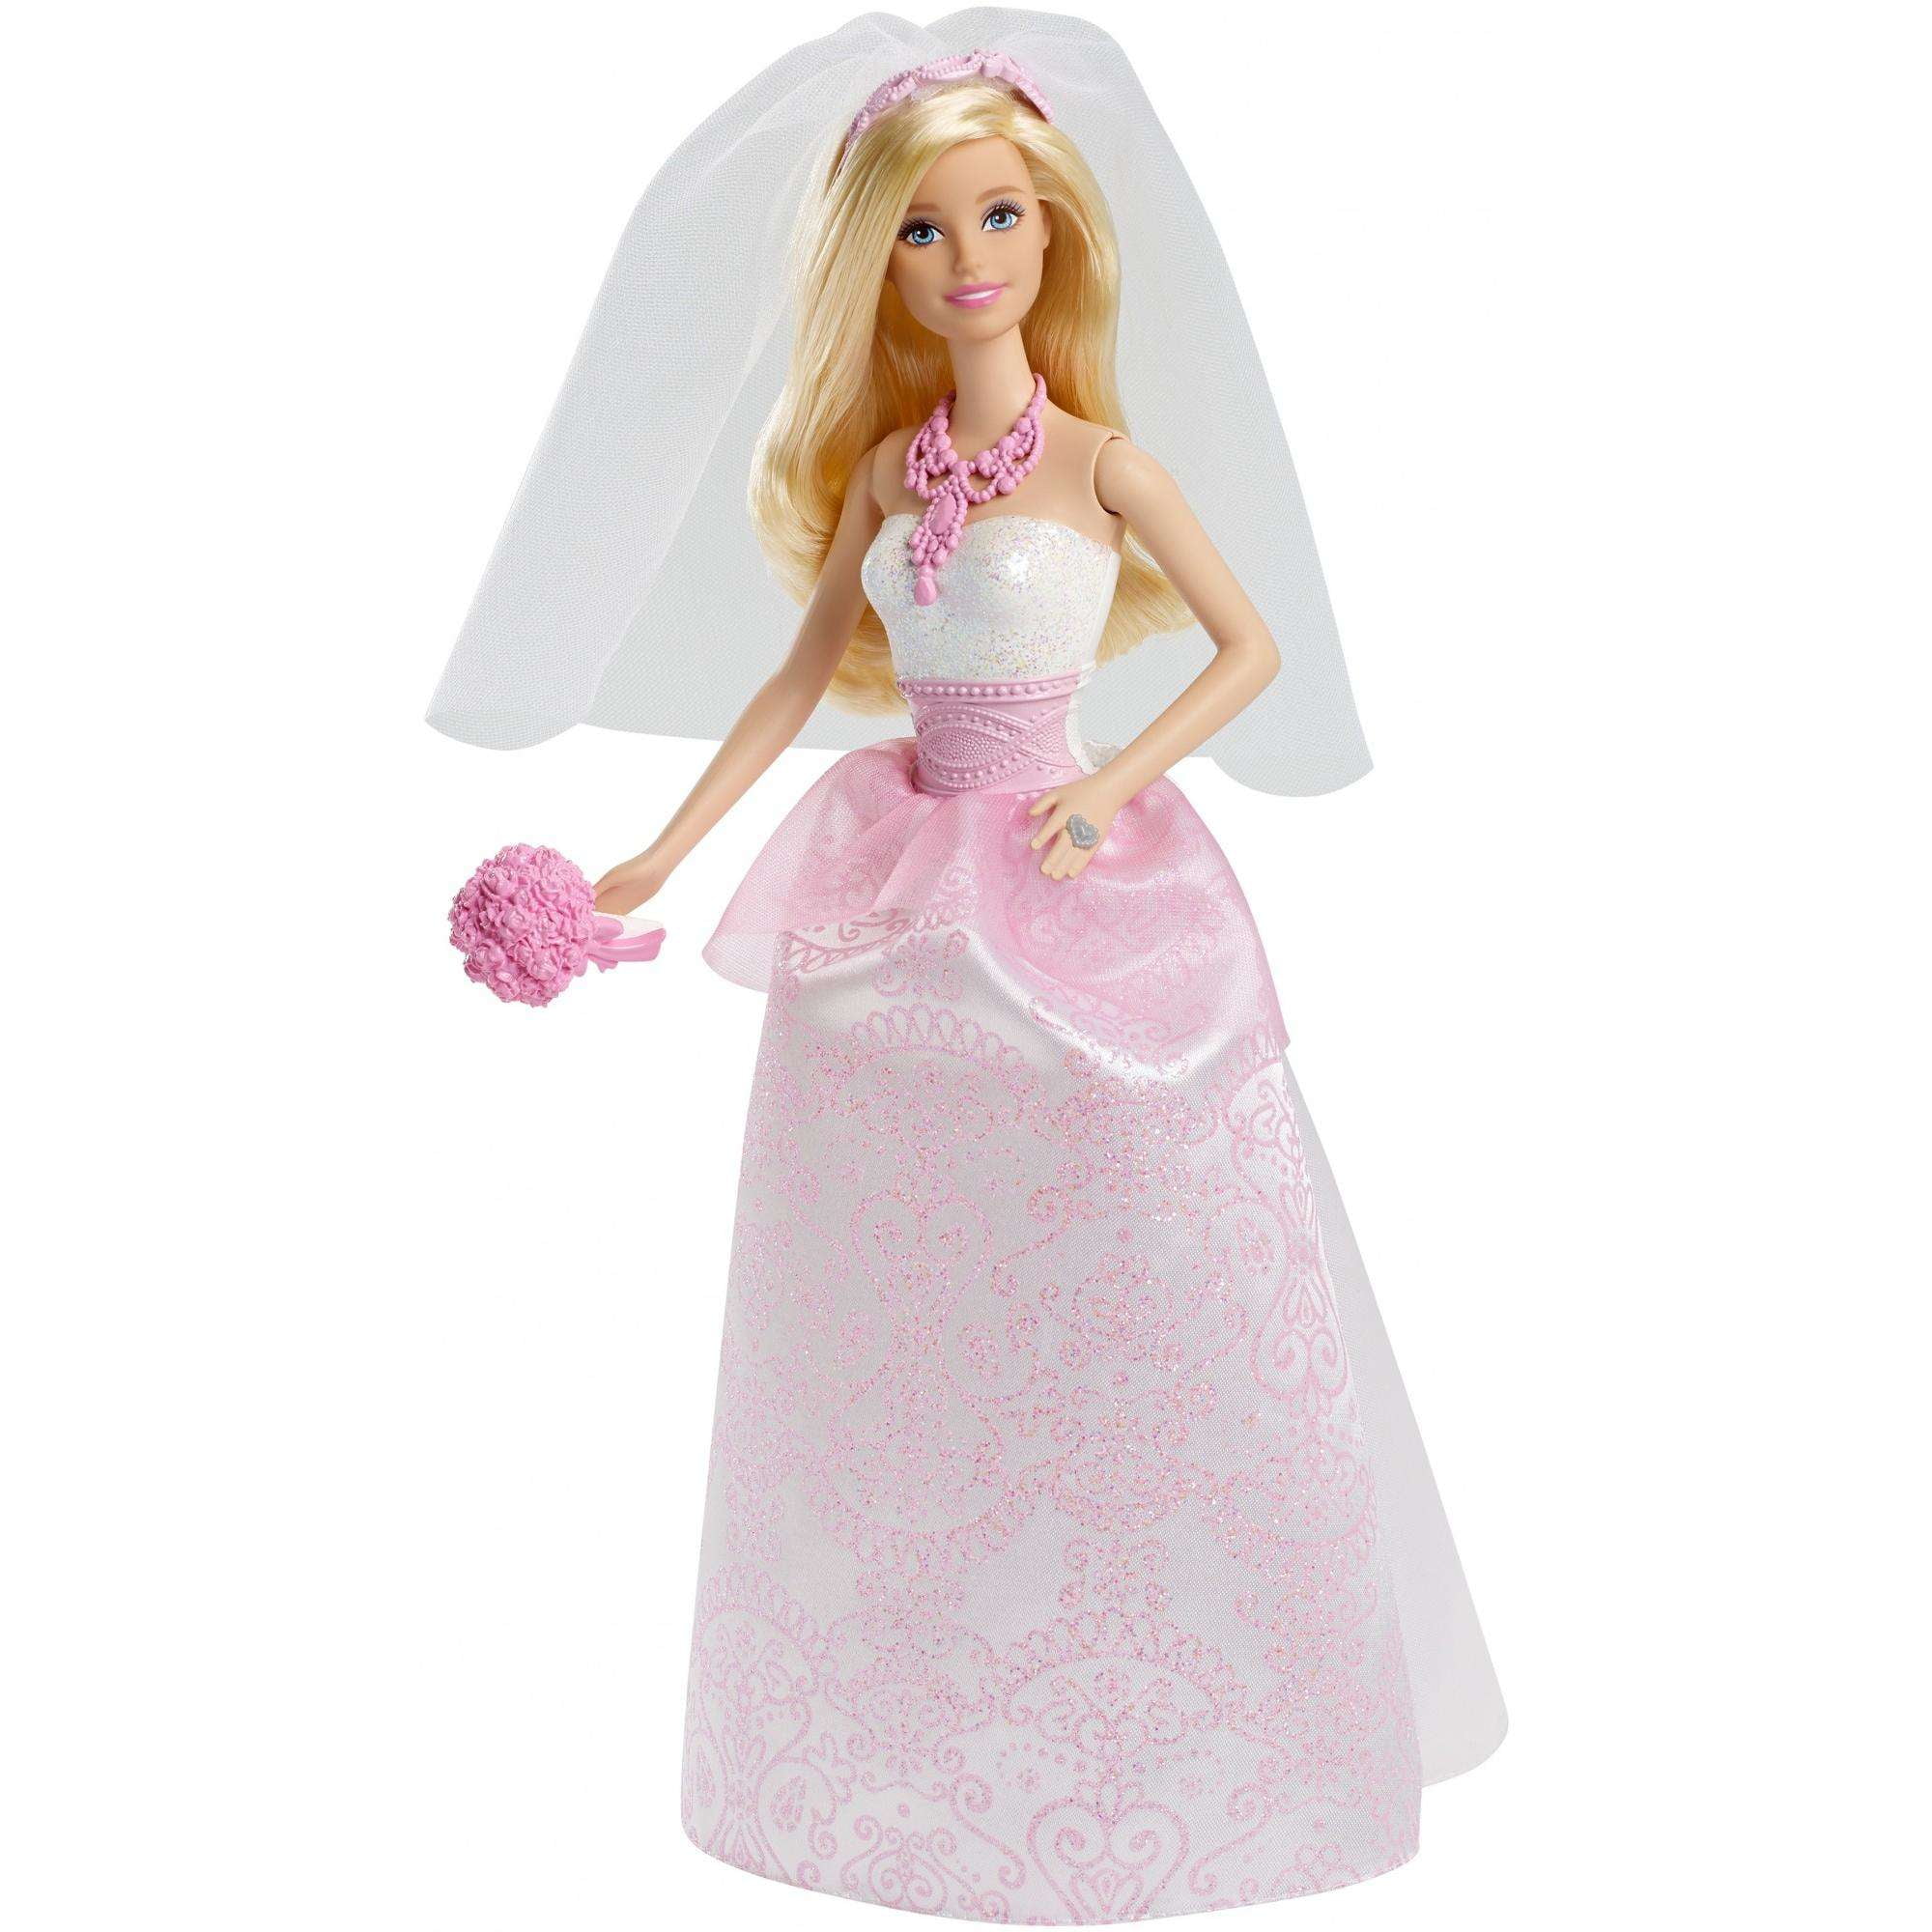 BNIP Barbie & Ken Royal Fairytale Wedding Groom & Bride Dolls 